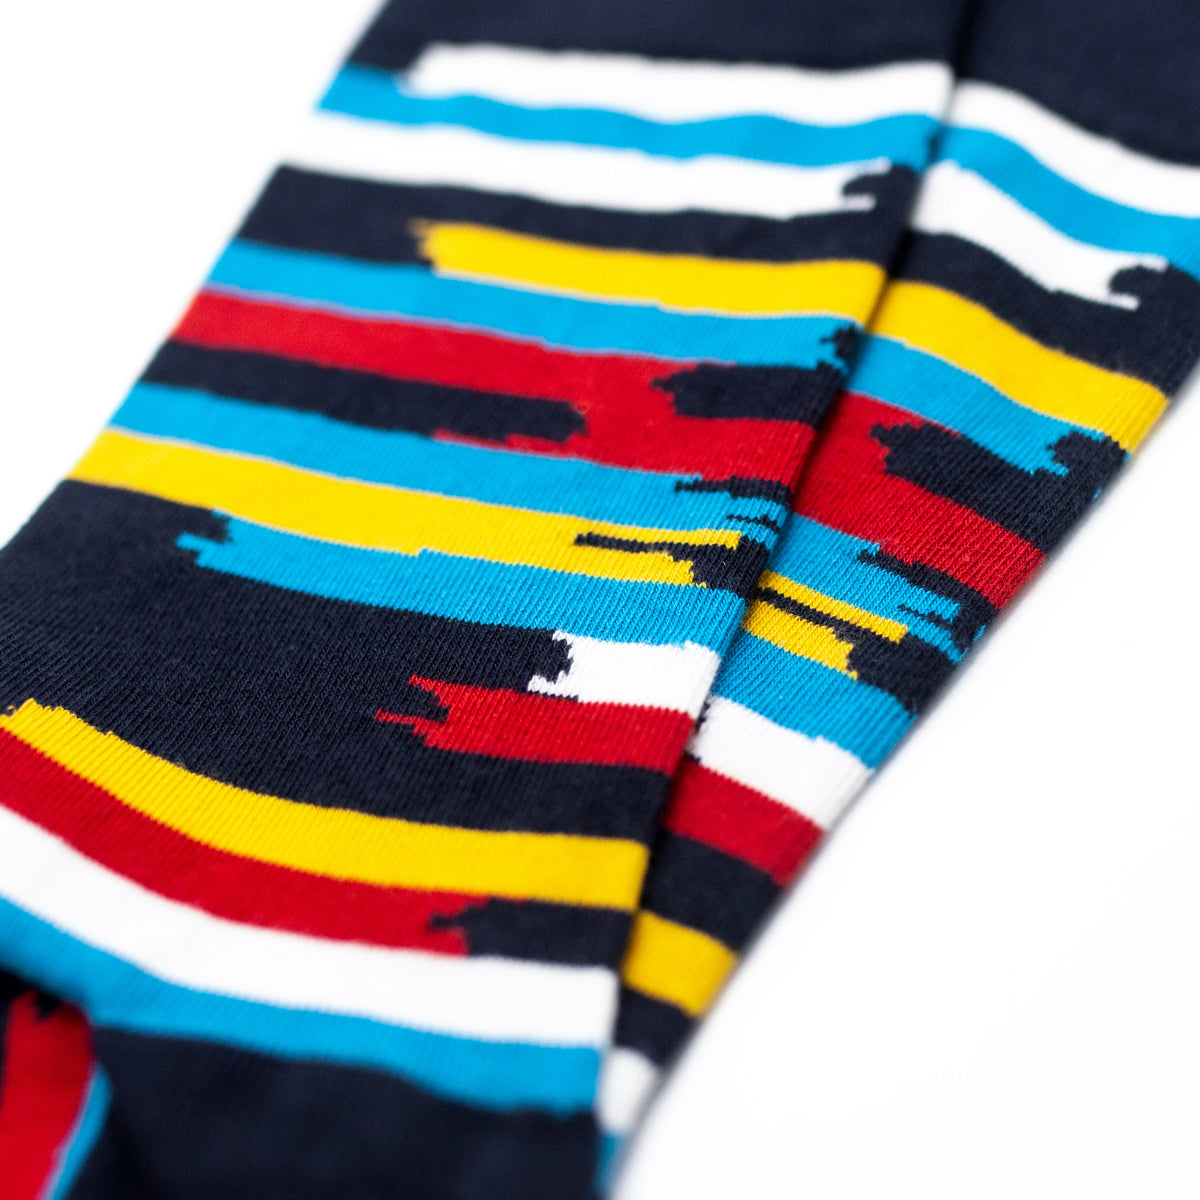 Fuzzy Stripe Mens Socks